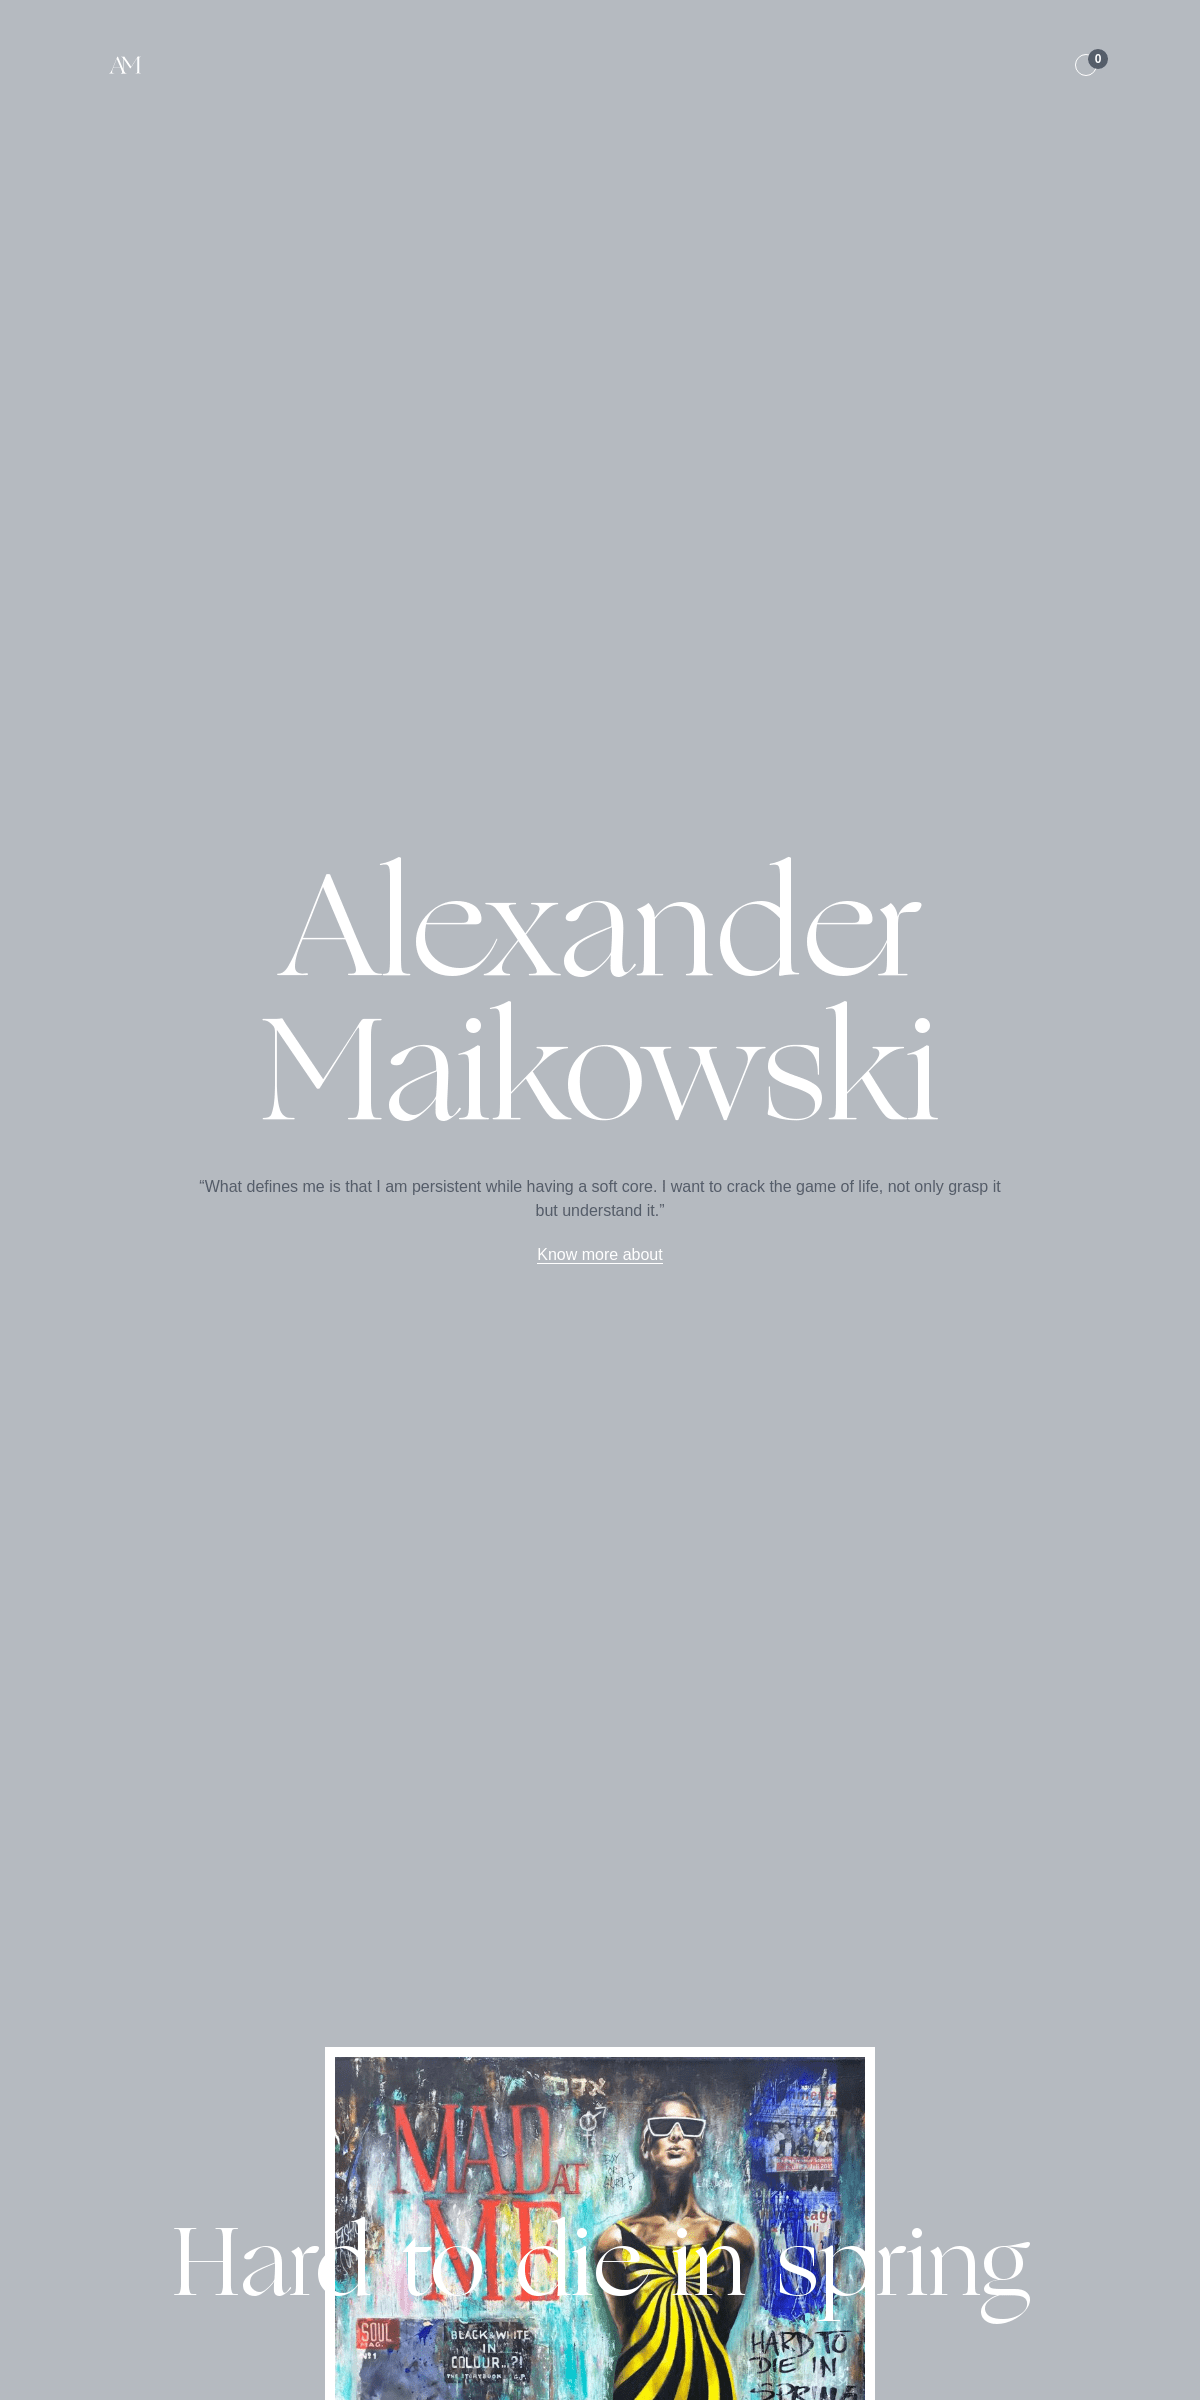 A complete backup of alexandermaikowski.com